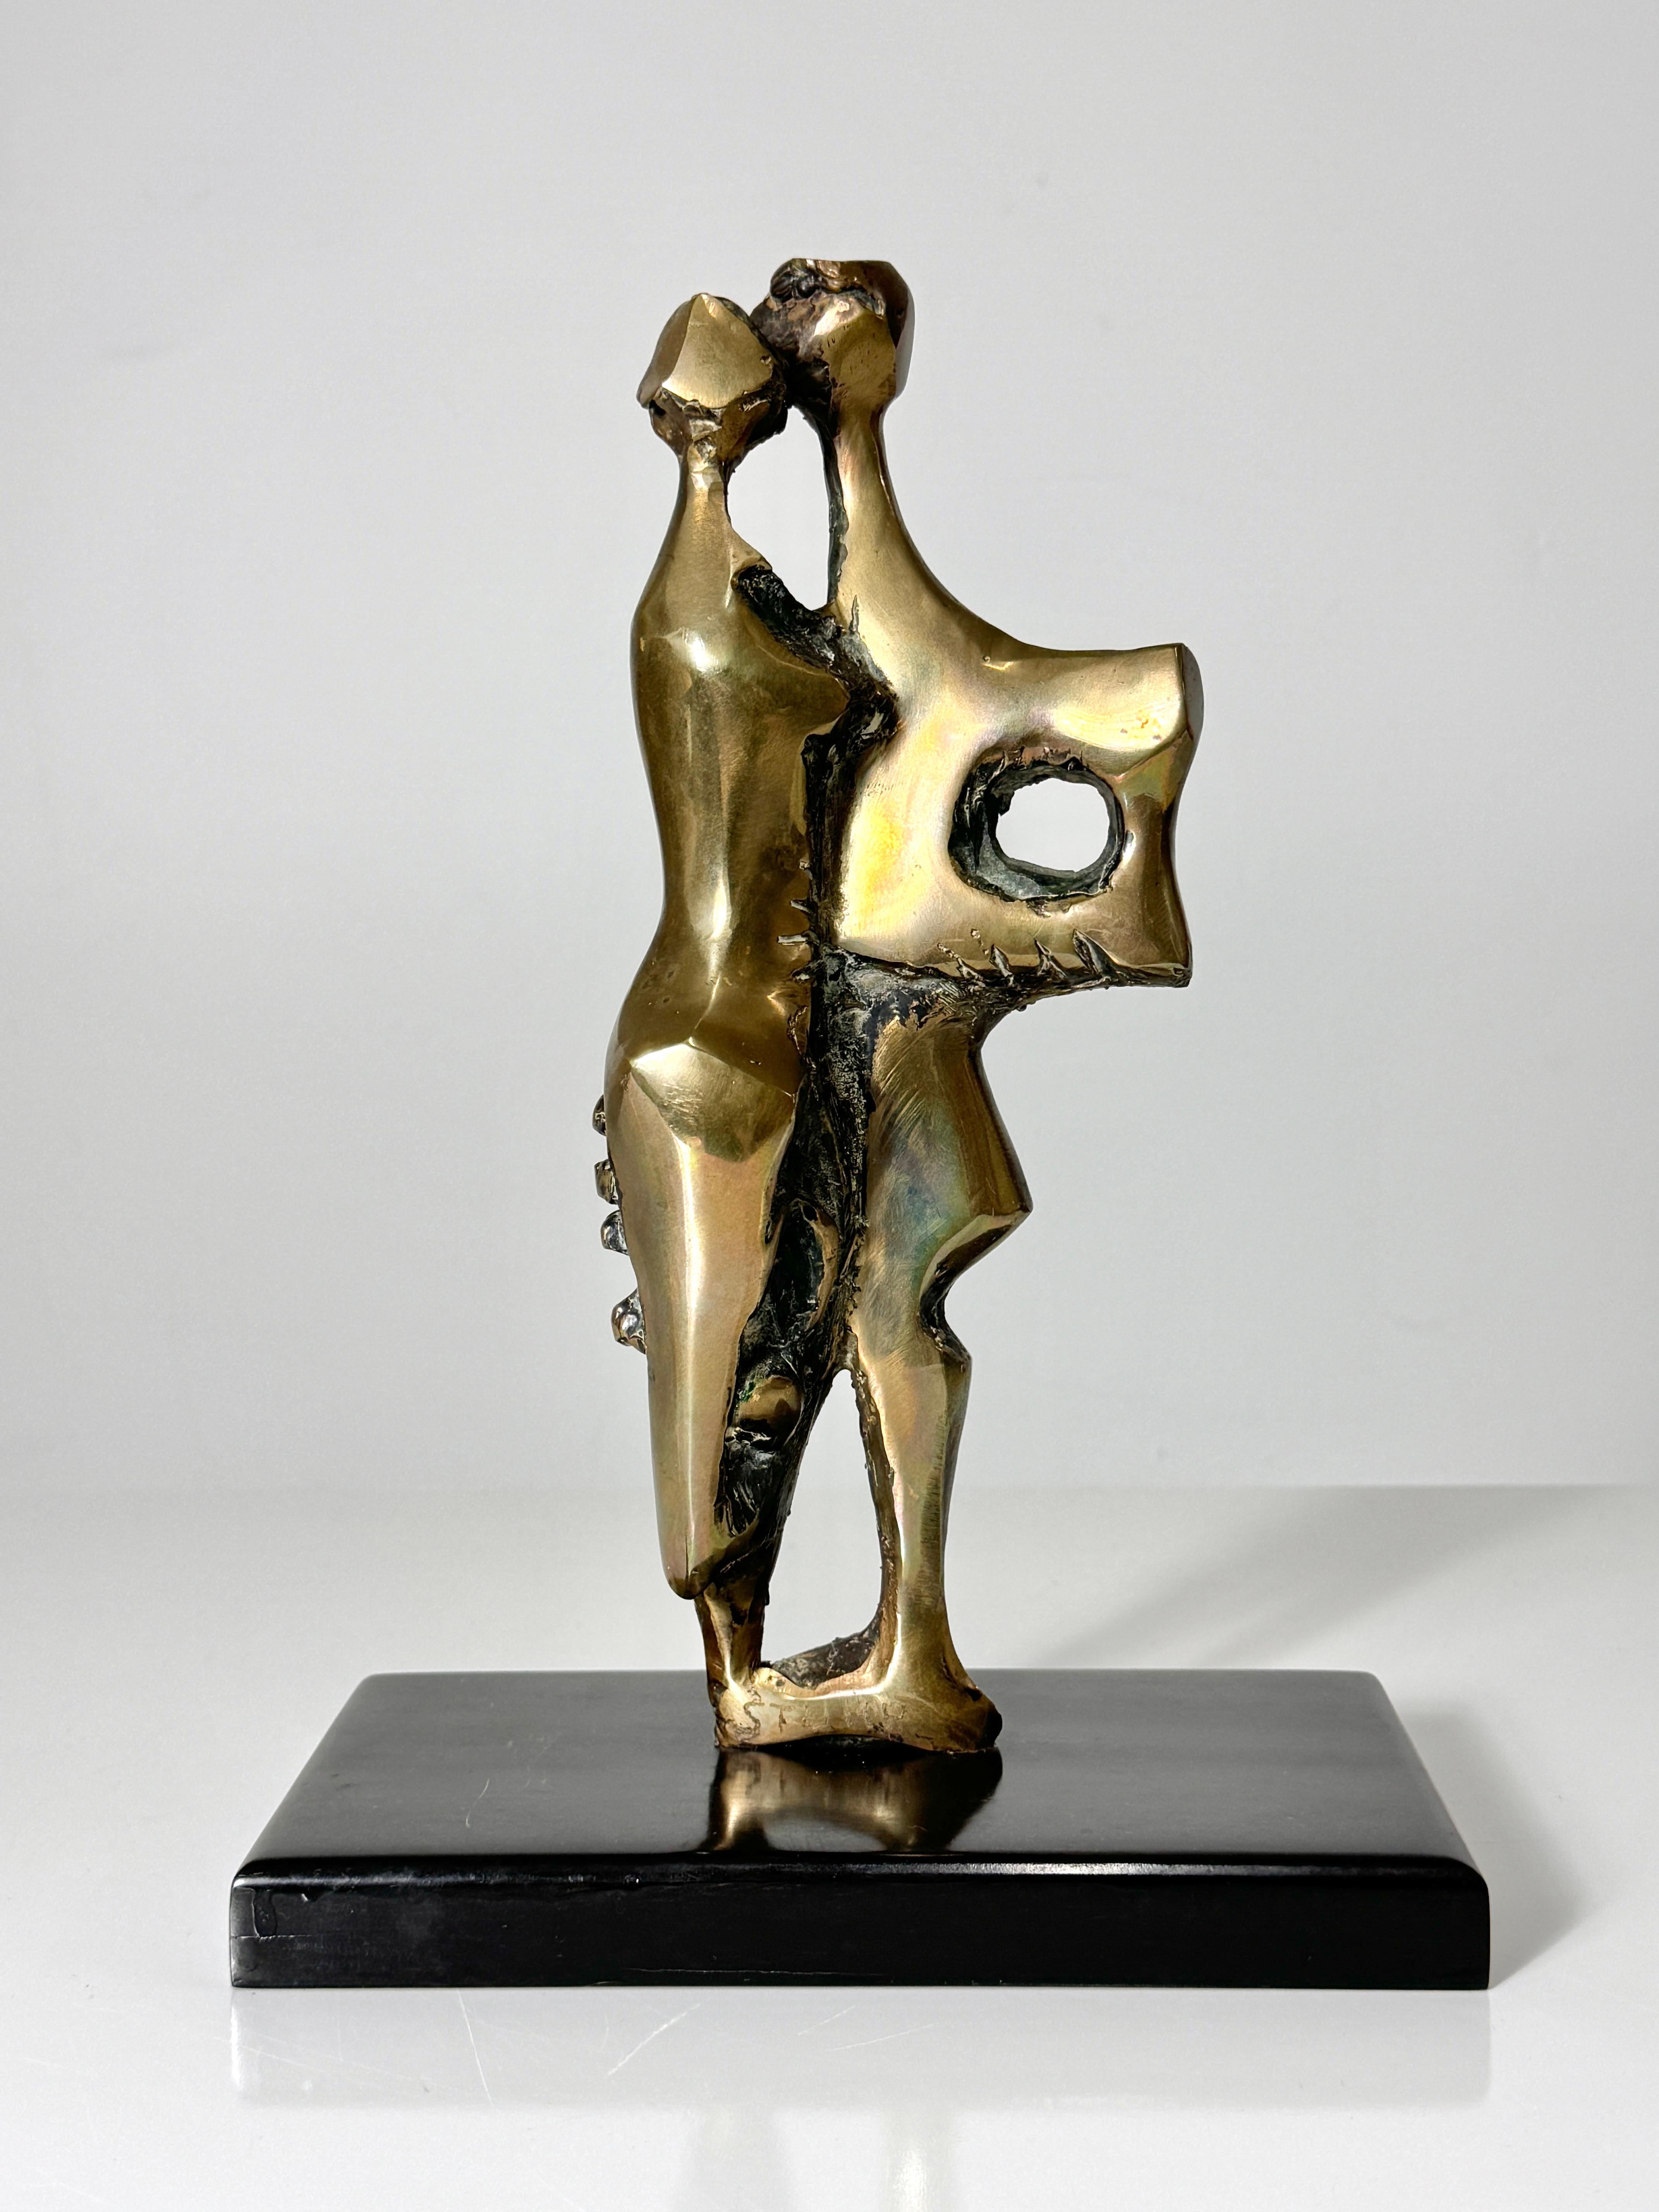 Figurative sculpture by Michigan artist Pamela Stump Walsh c. 1960s
Titled 